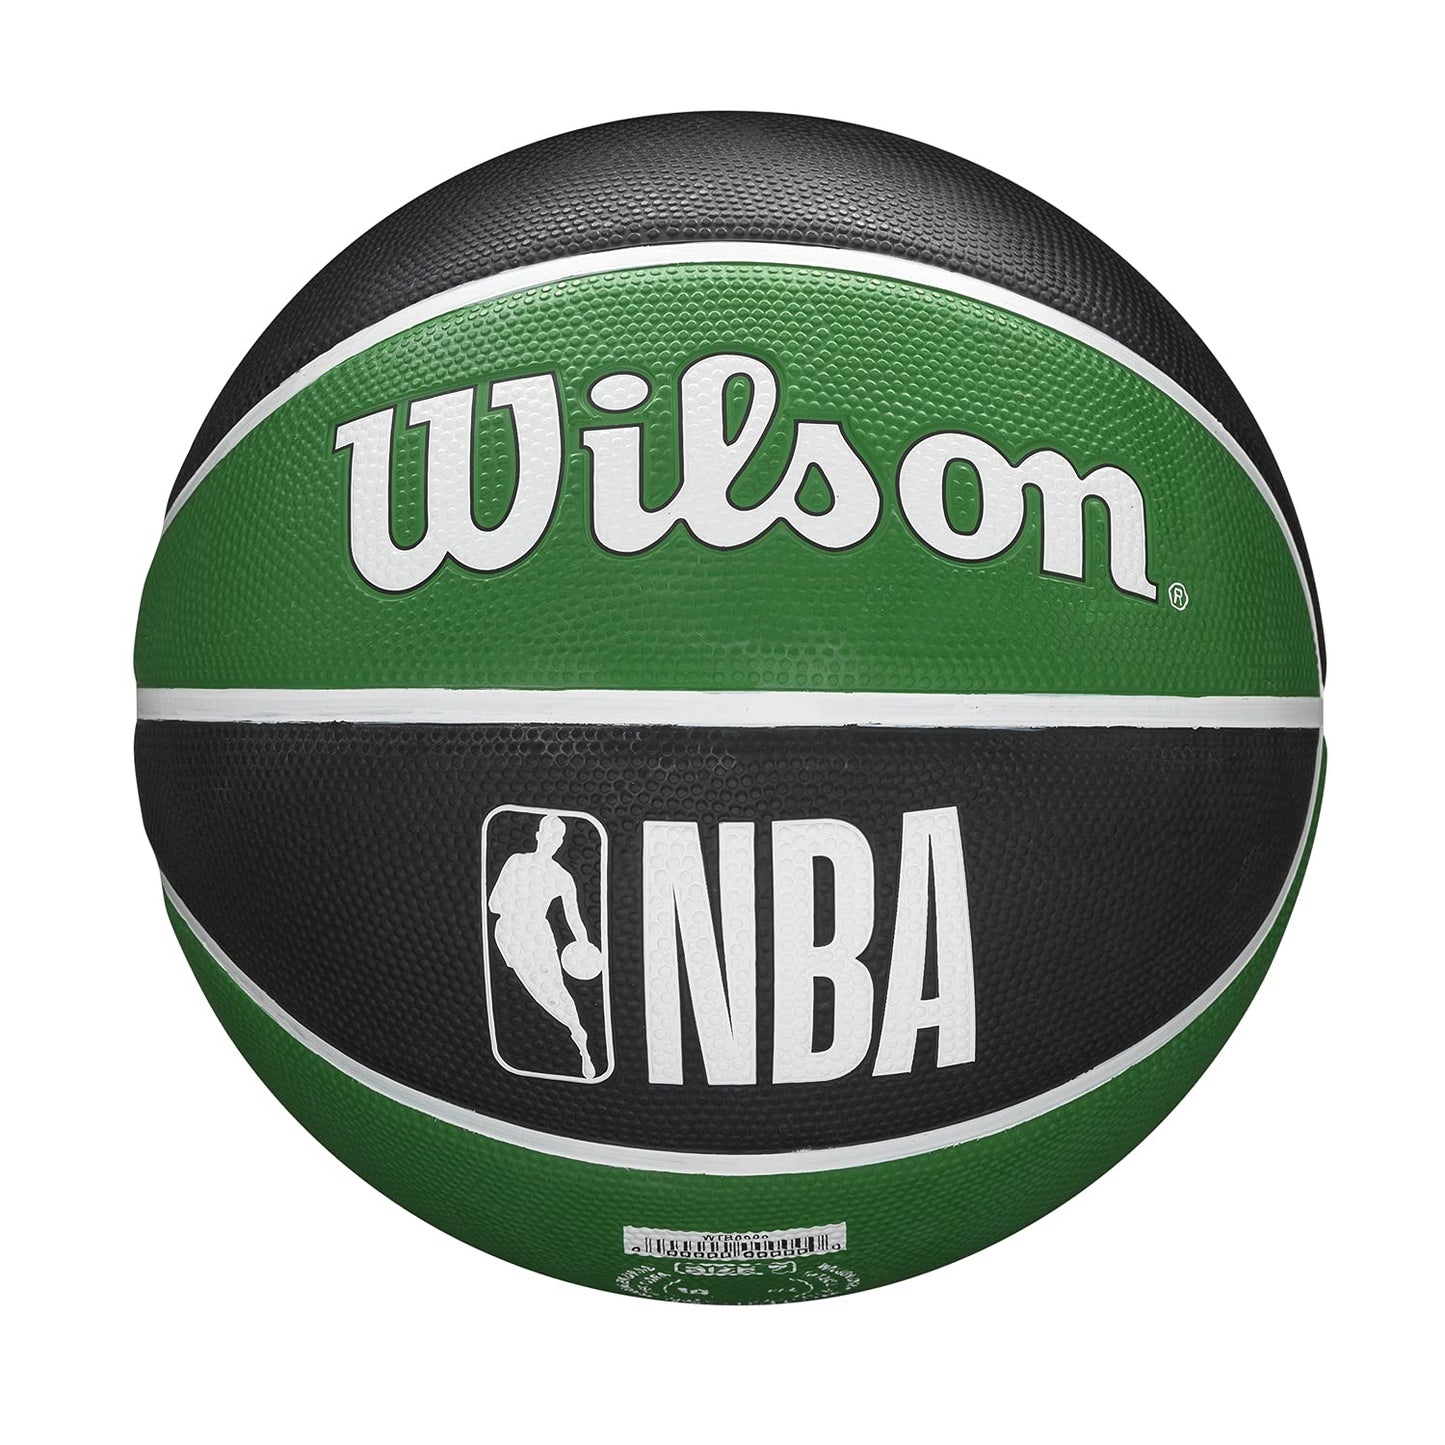 Wilson NBA Team Tribute Bos Celtics Basketball, Size 7 (Green/Black) - Best Price online Prokicksports.com